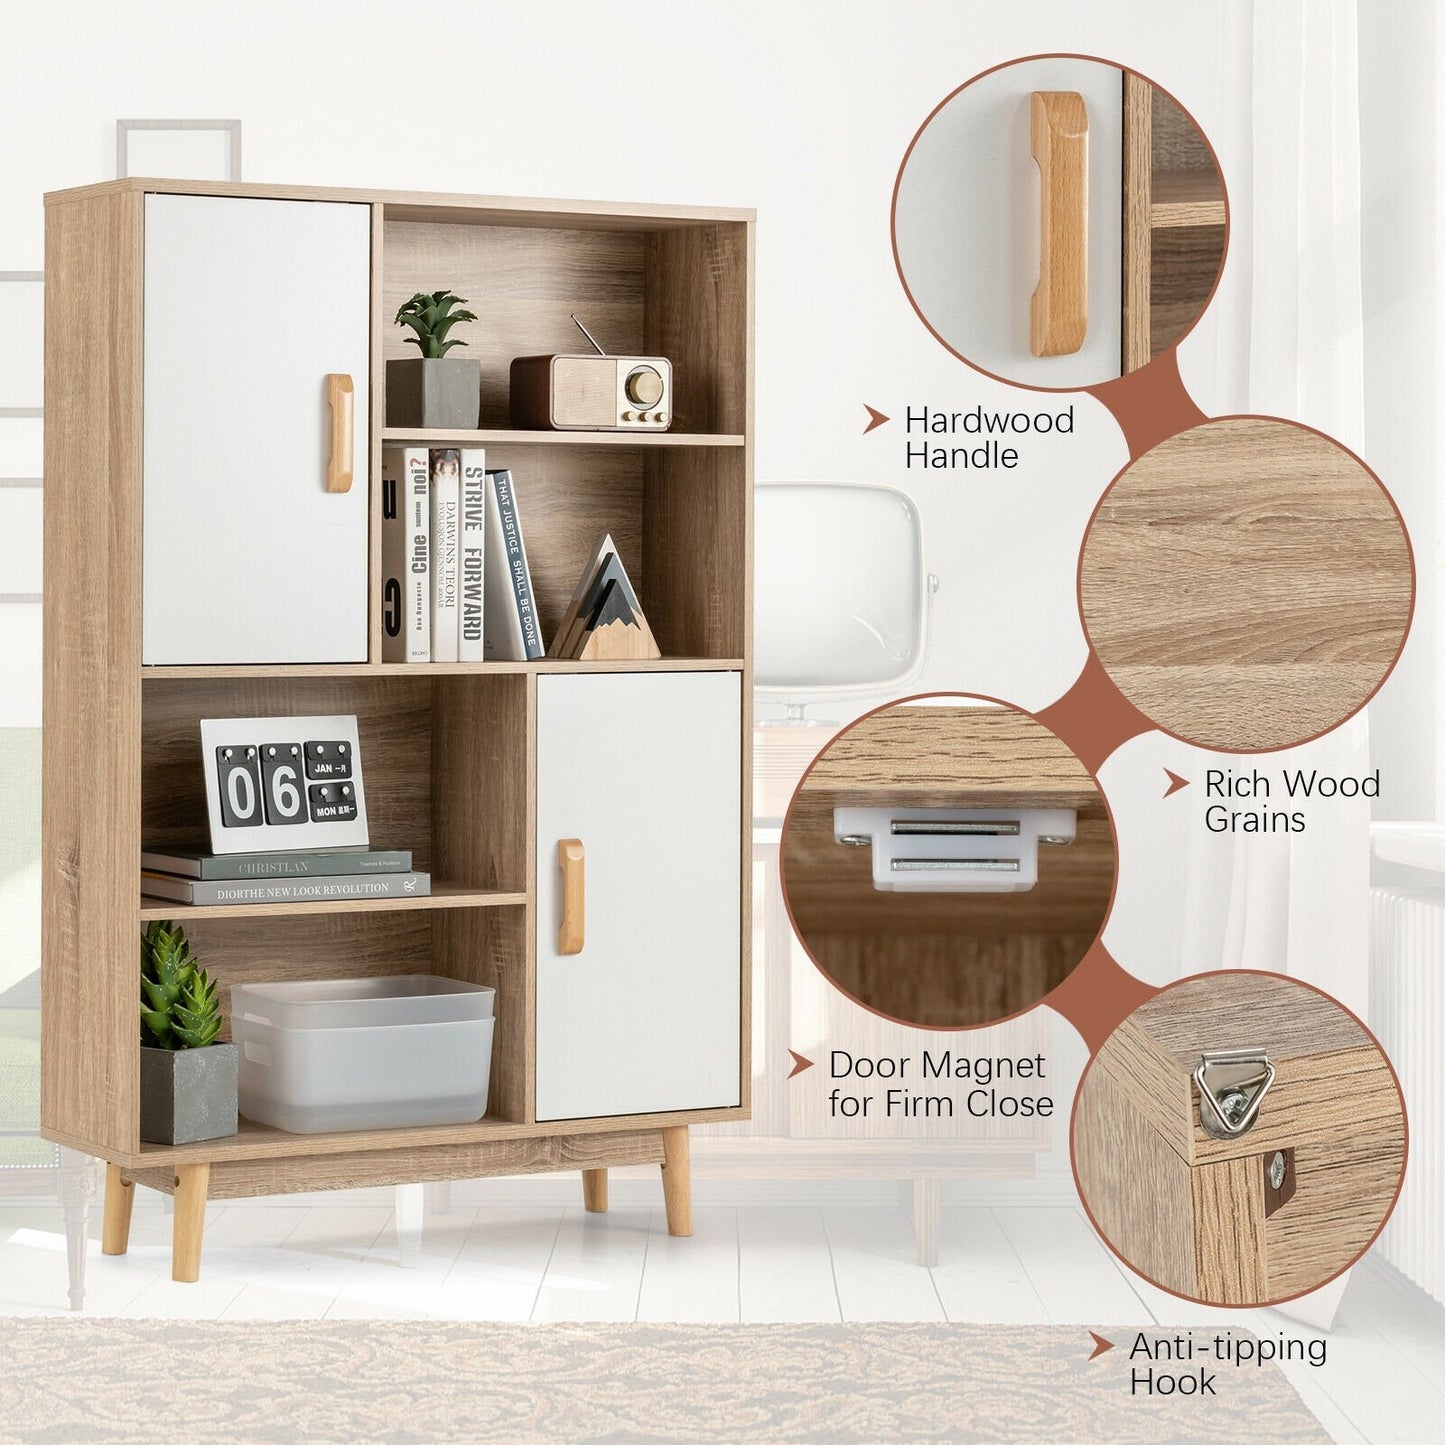 Sideboard Storage Cabinet with Door Shelf, White - Gallery Canada